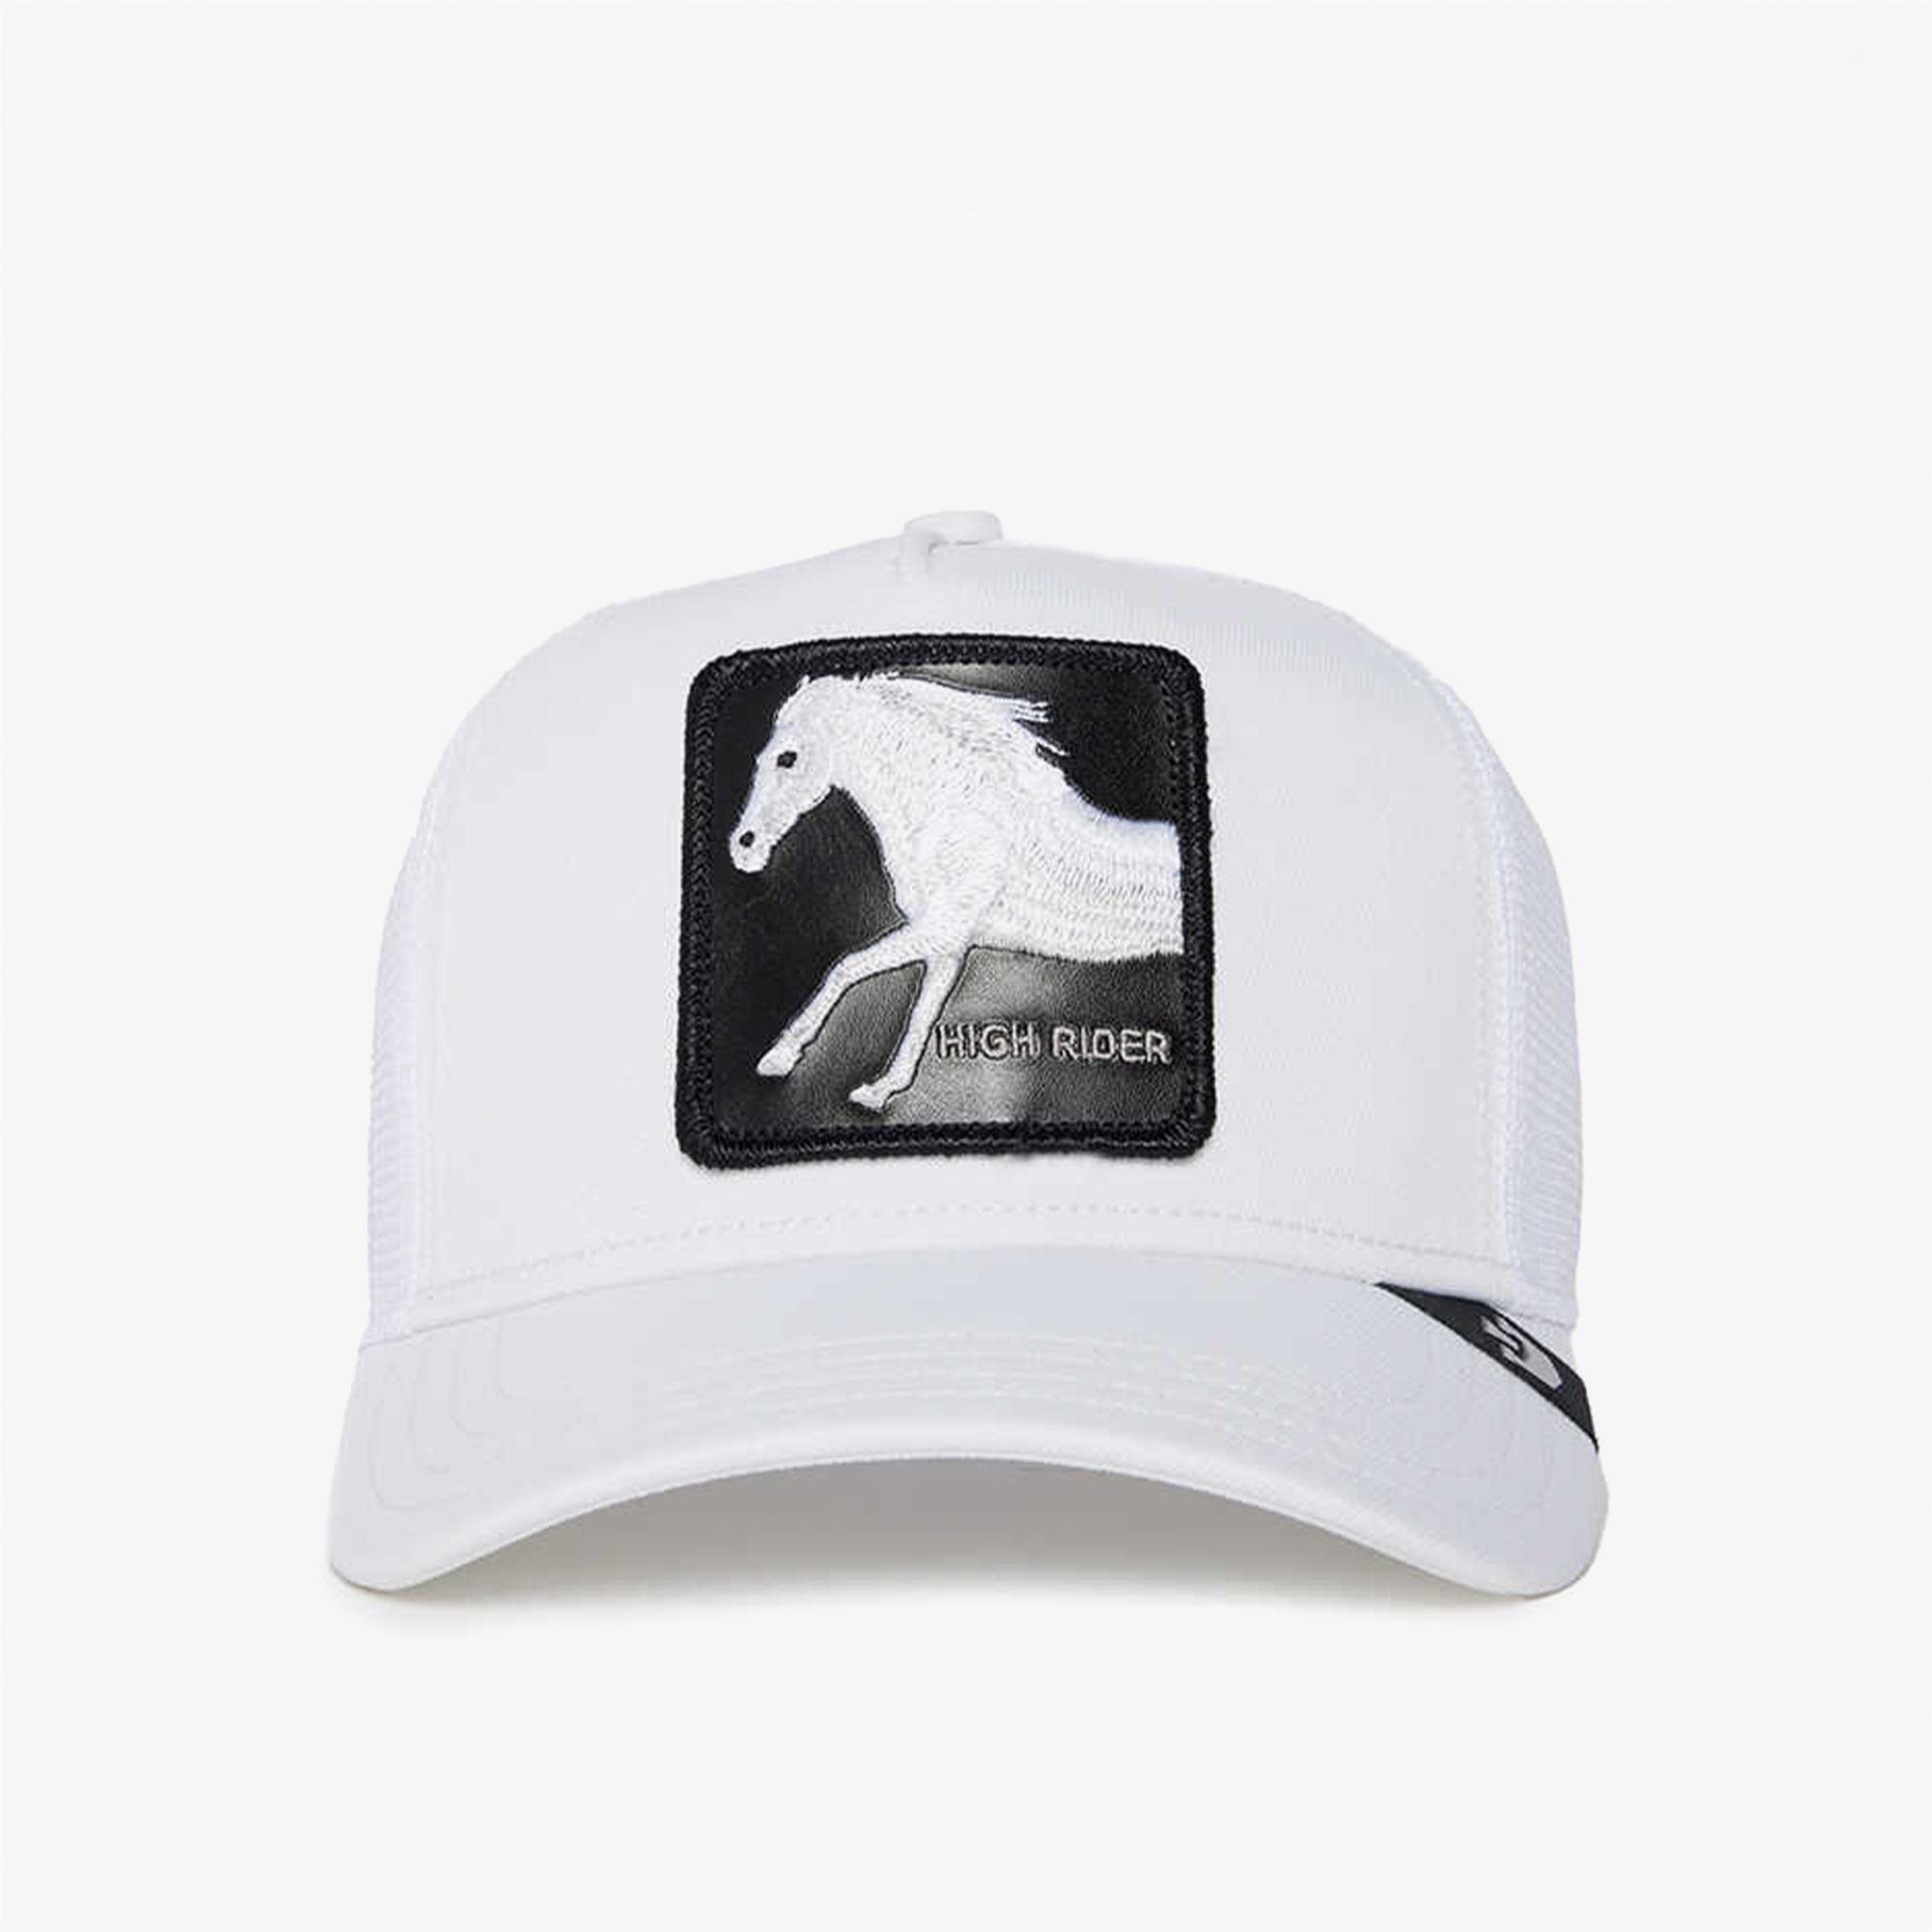  Goorin Bros Platinum High Unisex Beyaz Şapka